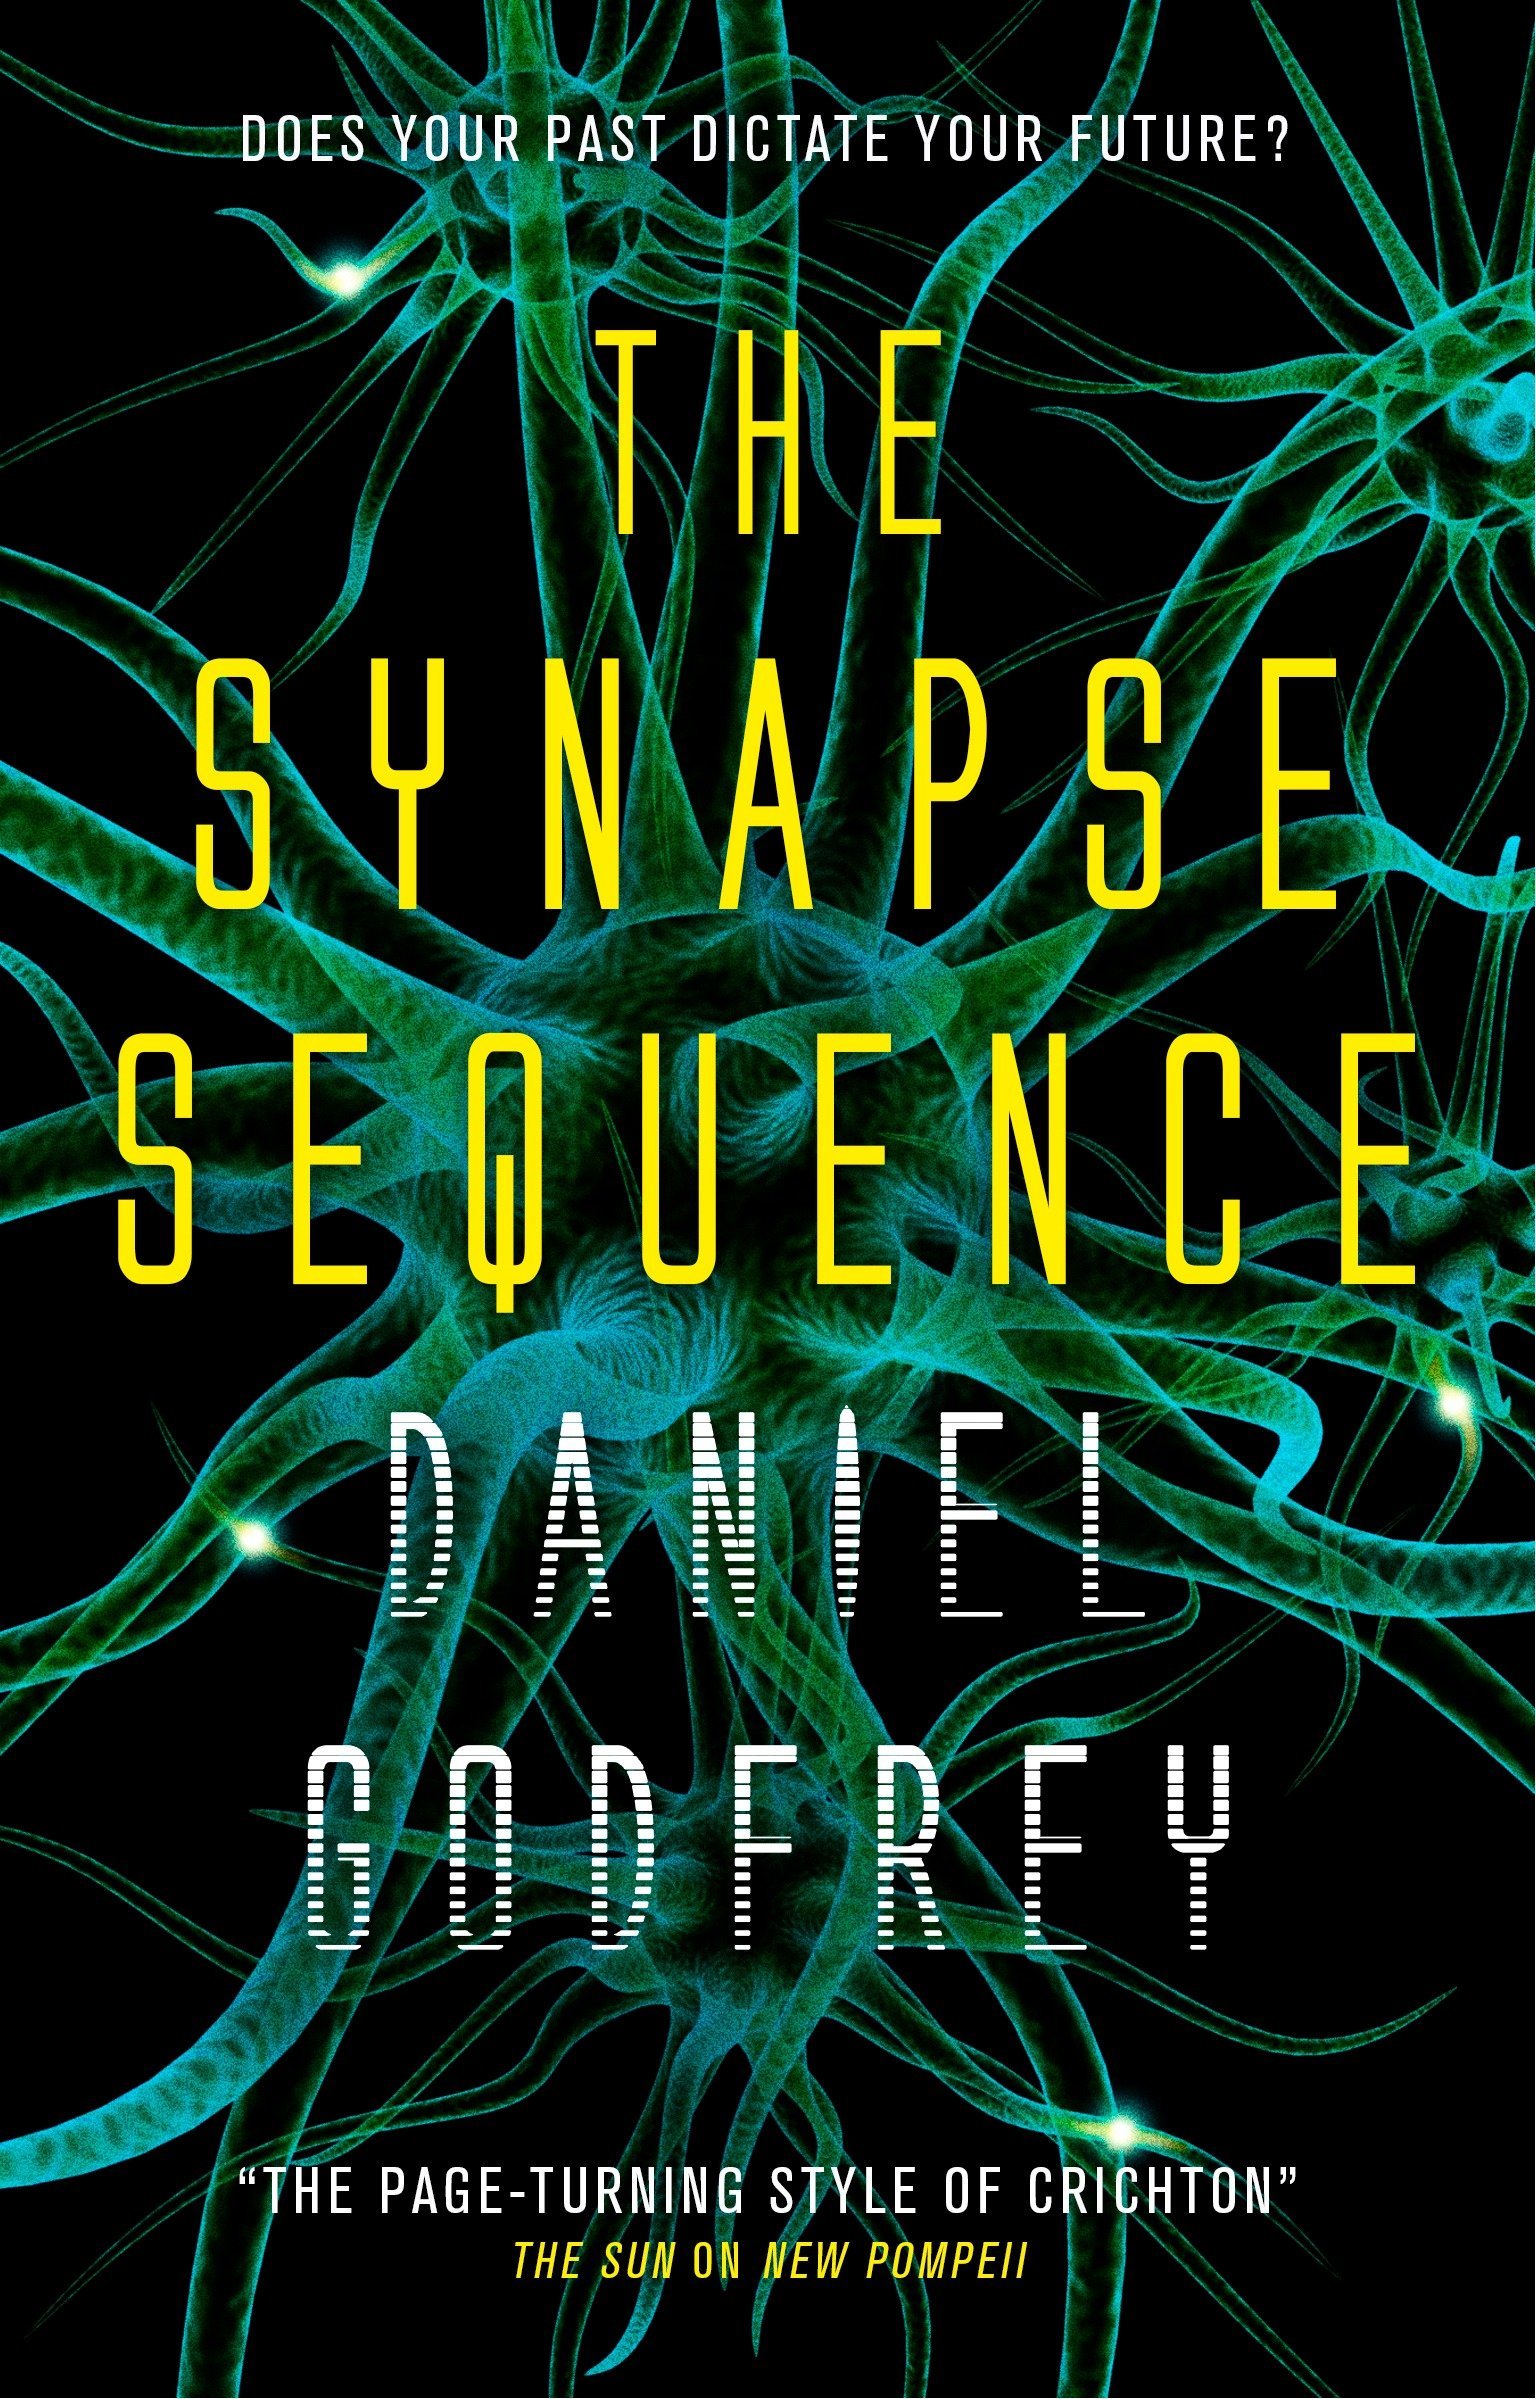 Godfrey, Daniel (Novelist): The synapse sequence (2018)